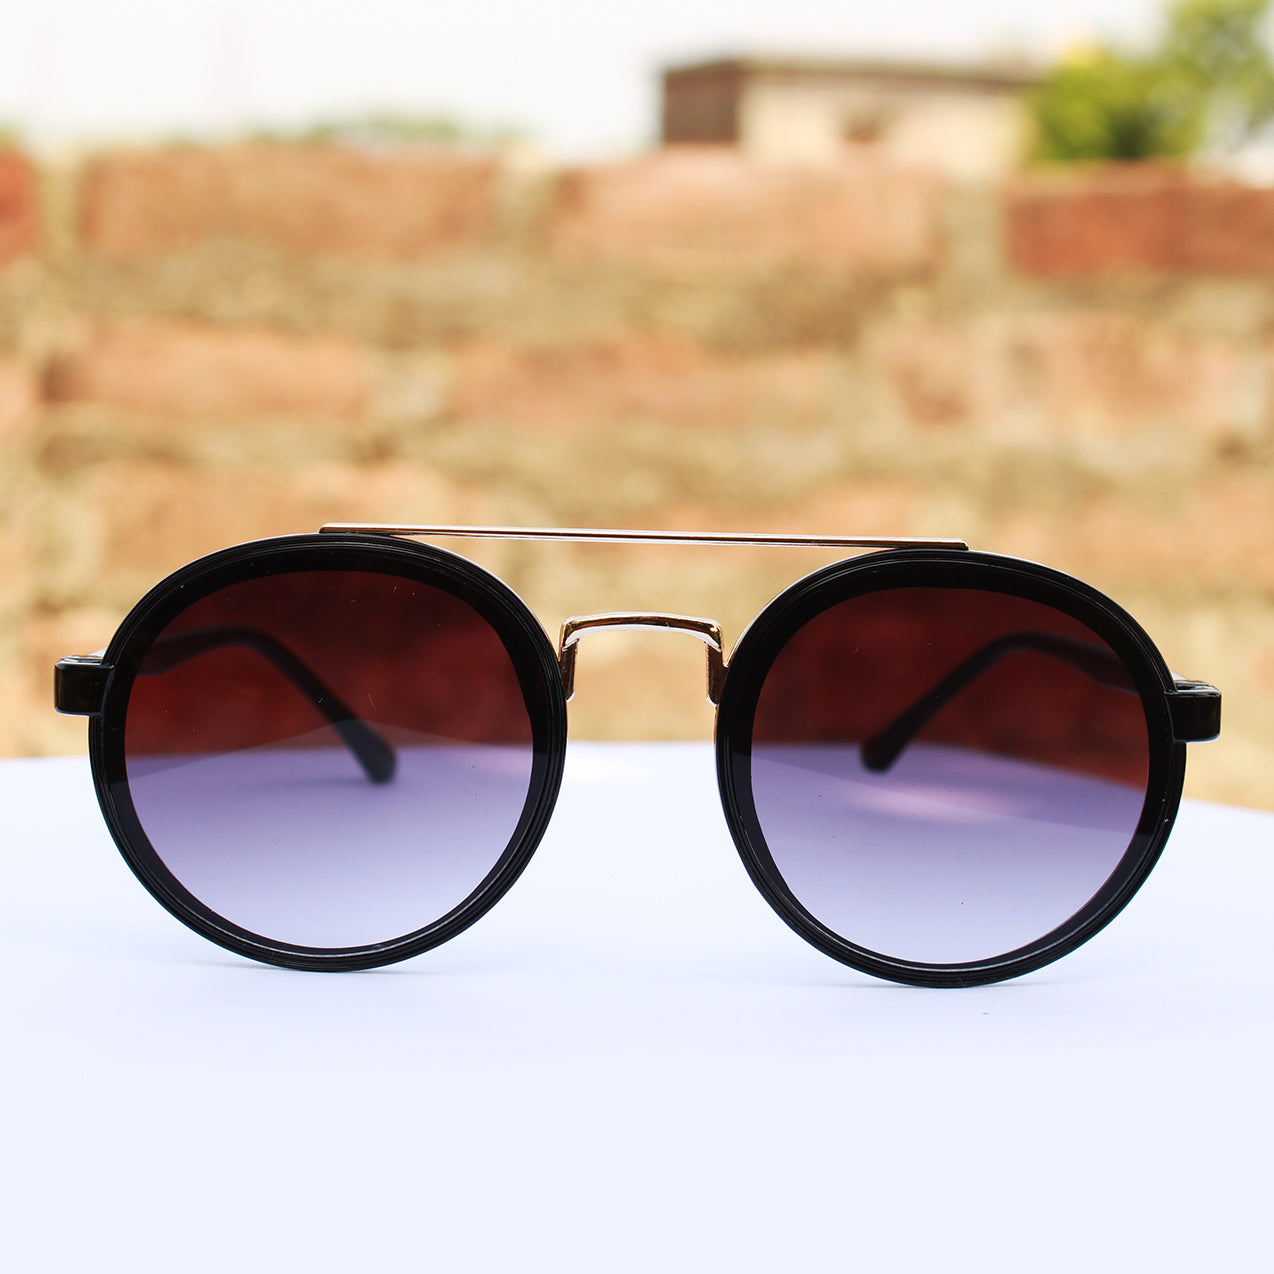 Jiebo Round 100% UV Protection Sunglasses